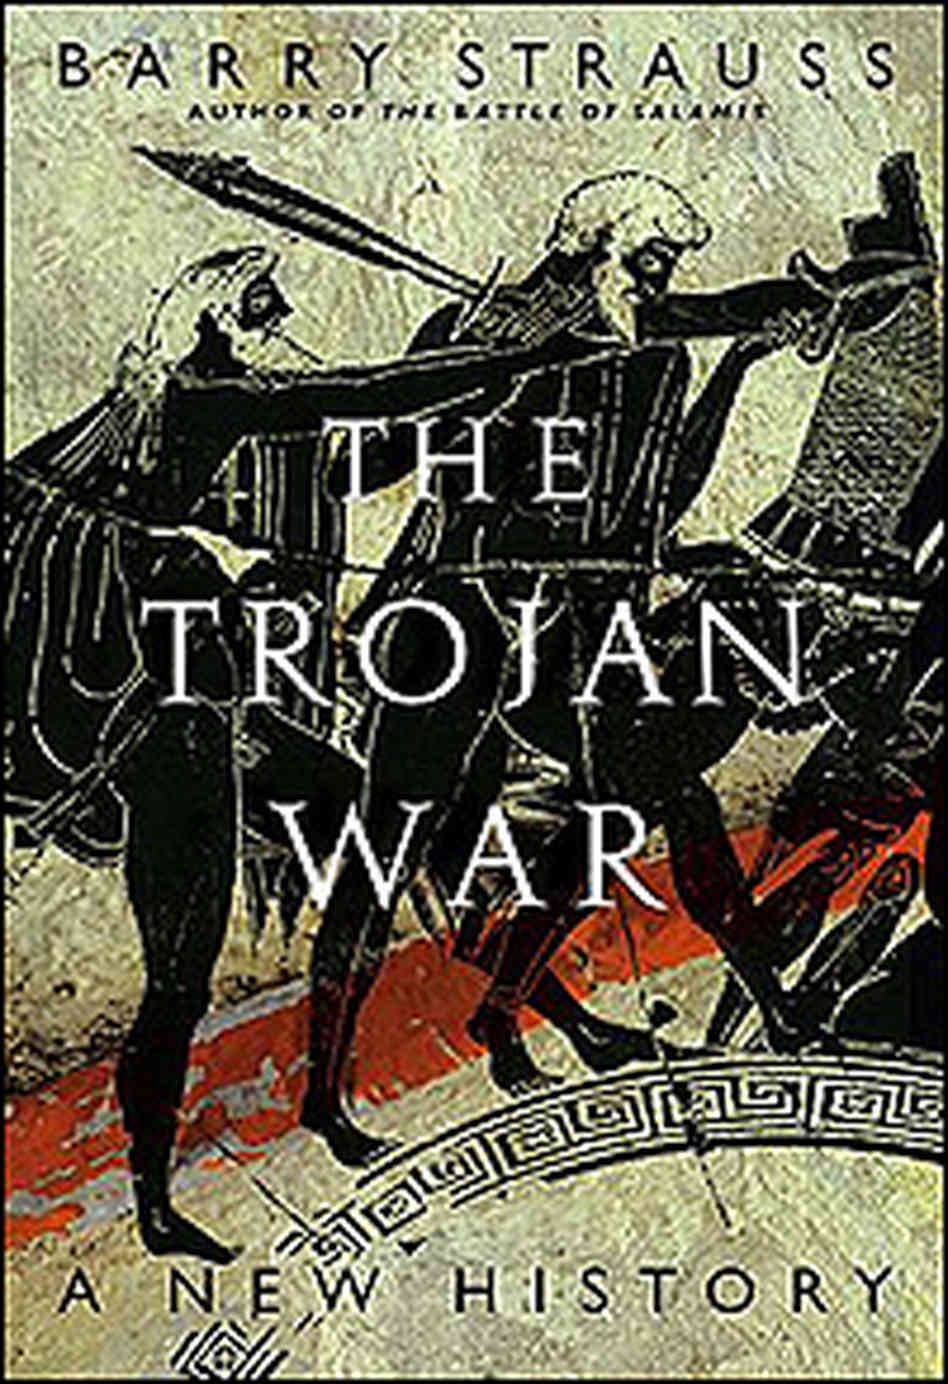 William Shakespeare s The Trojan War